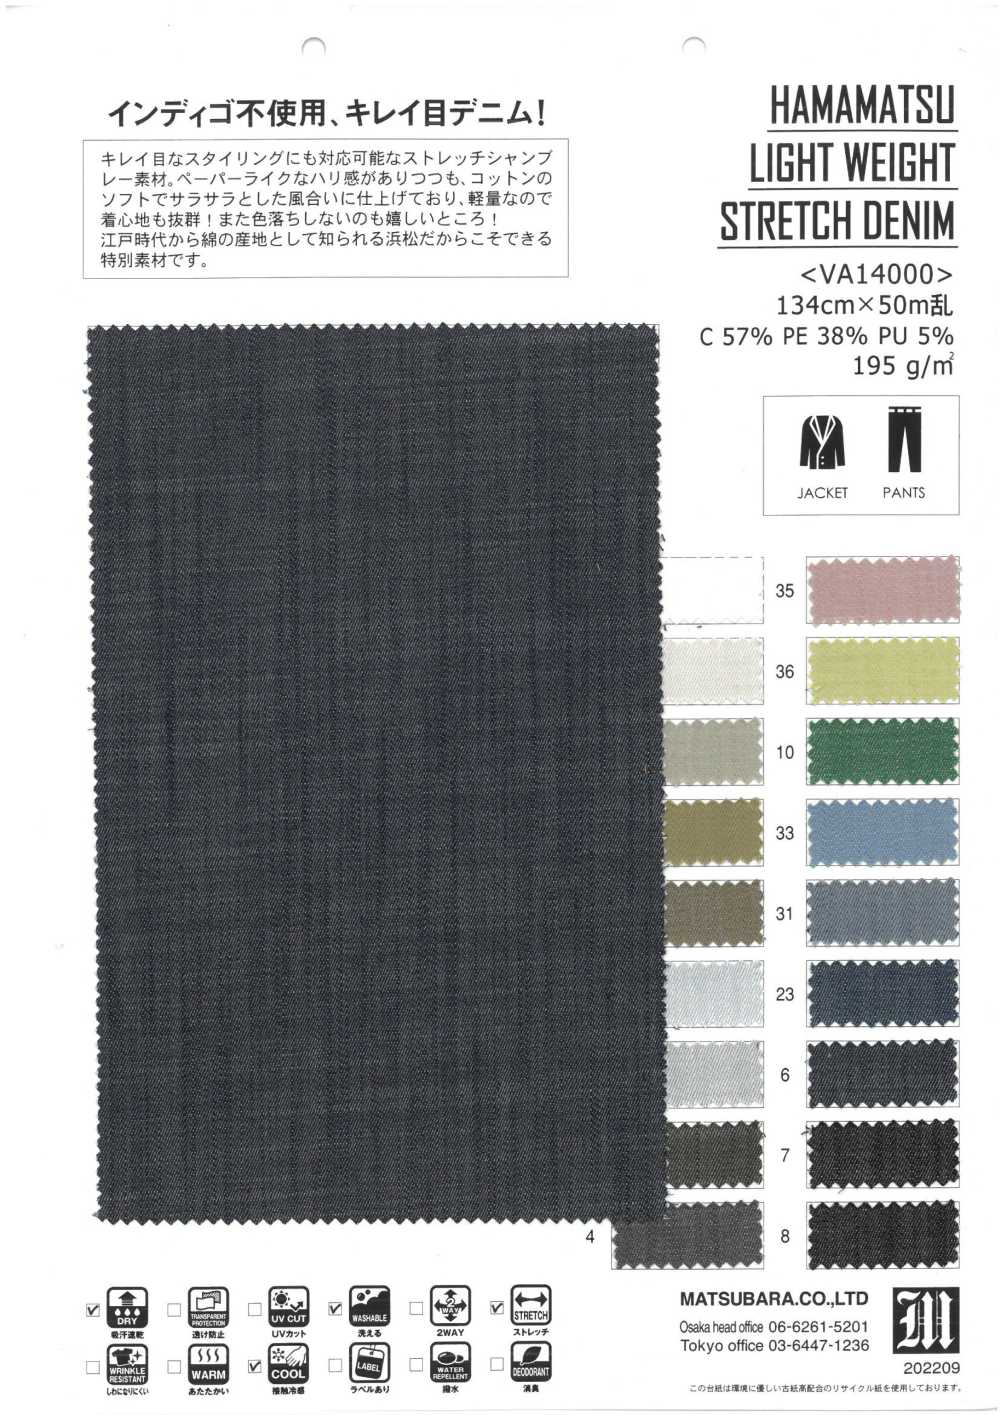 VA14000 HAMAMATSU LEICHTER STRETCH-DENIM[Textilgewebe] Matsubara